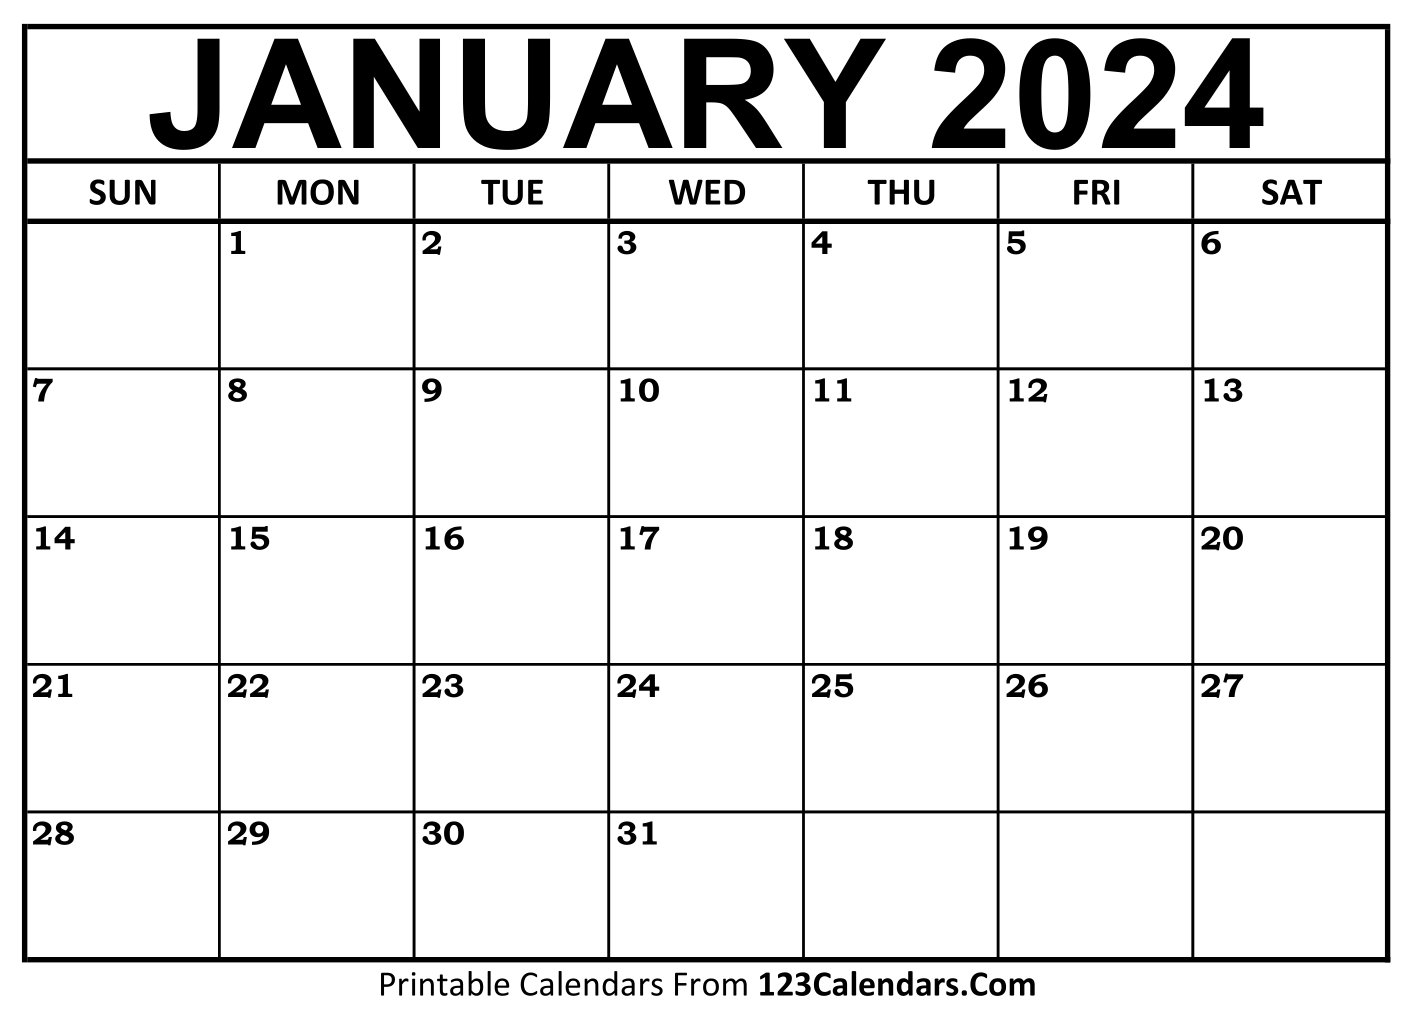 Printable January 2024 Calendar Templates - 123Calendars for Jan Calendar 2024 Printable